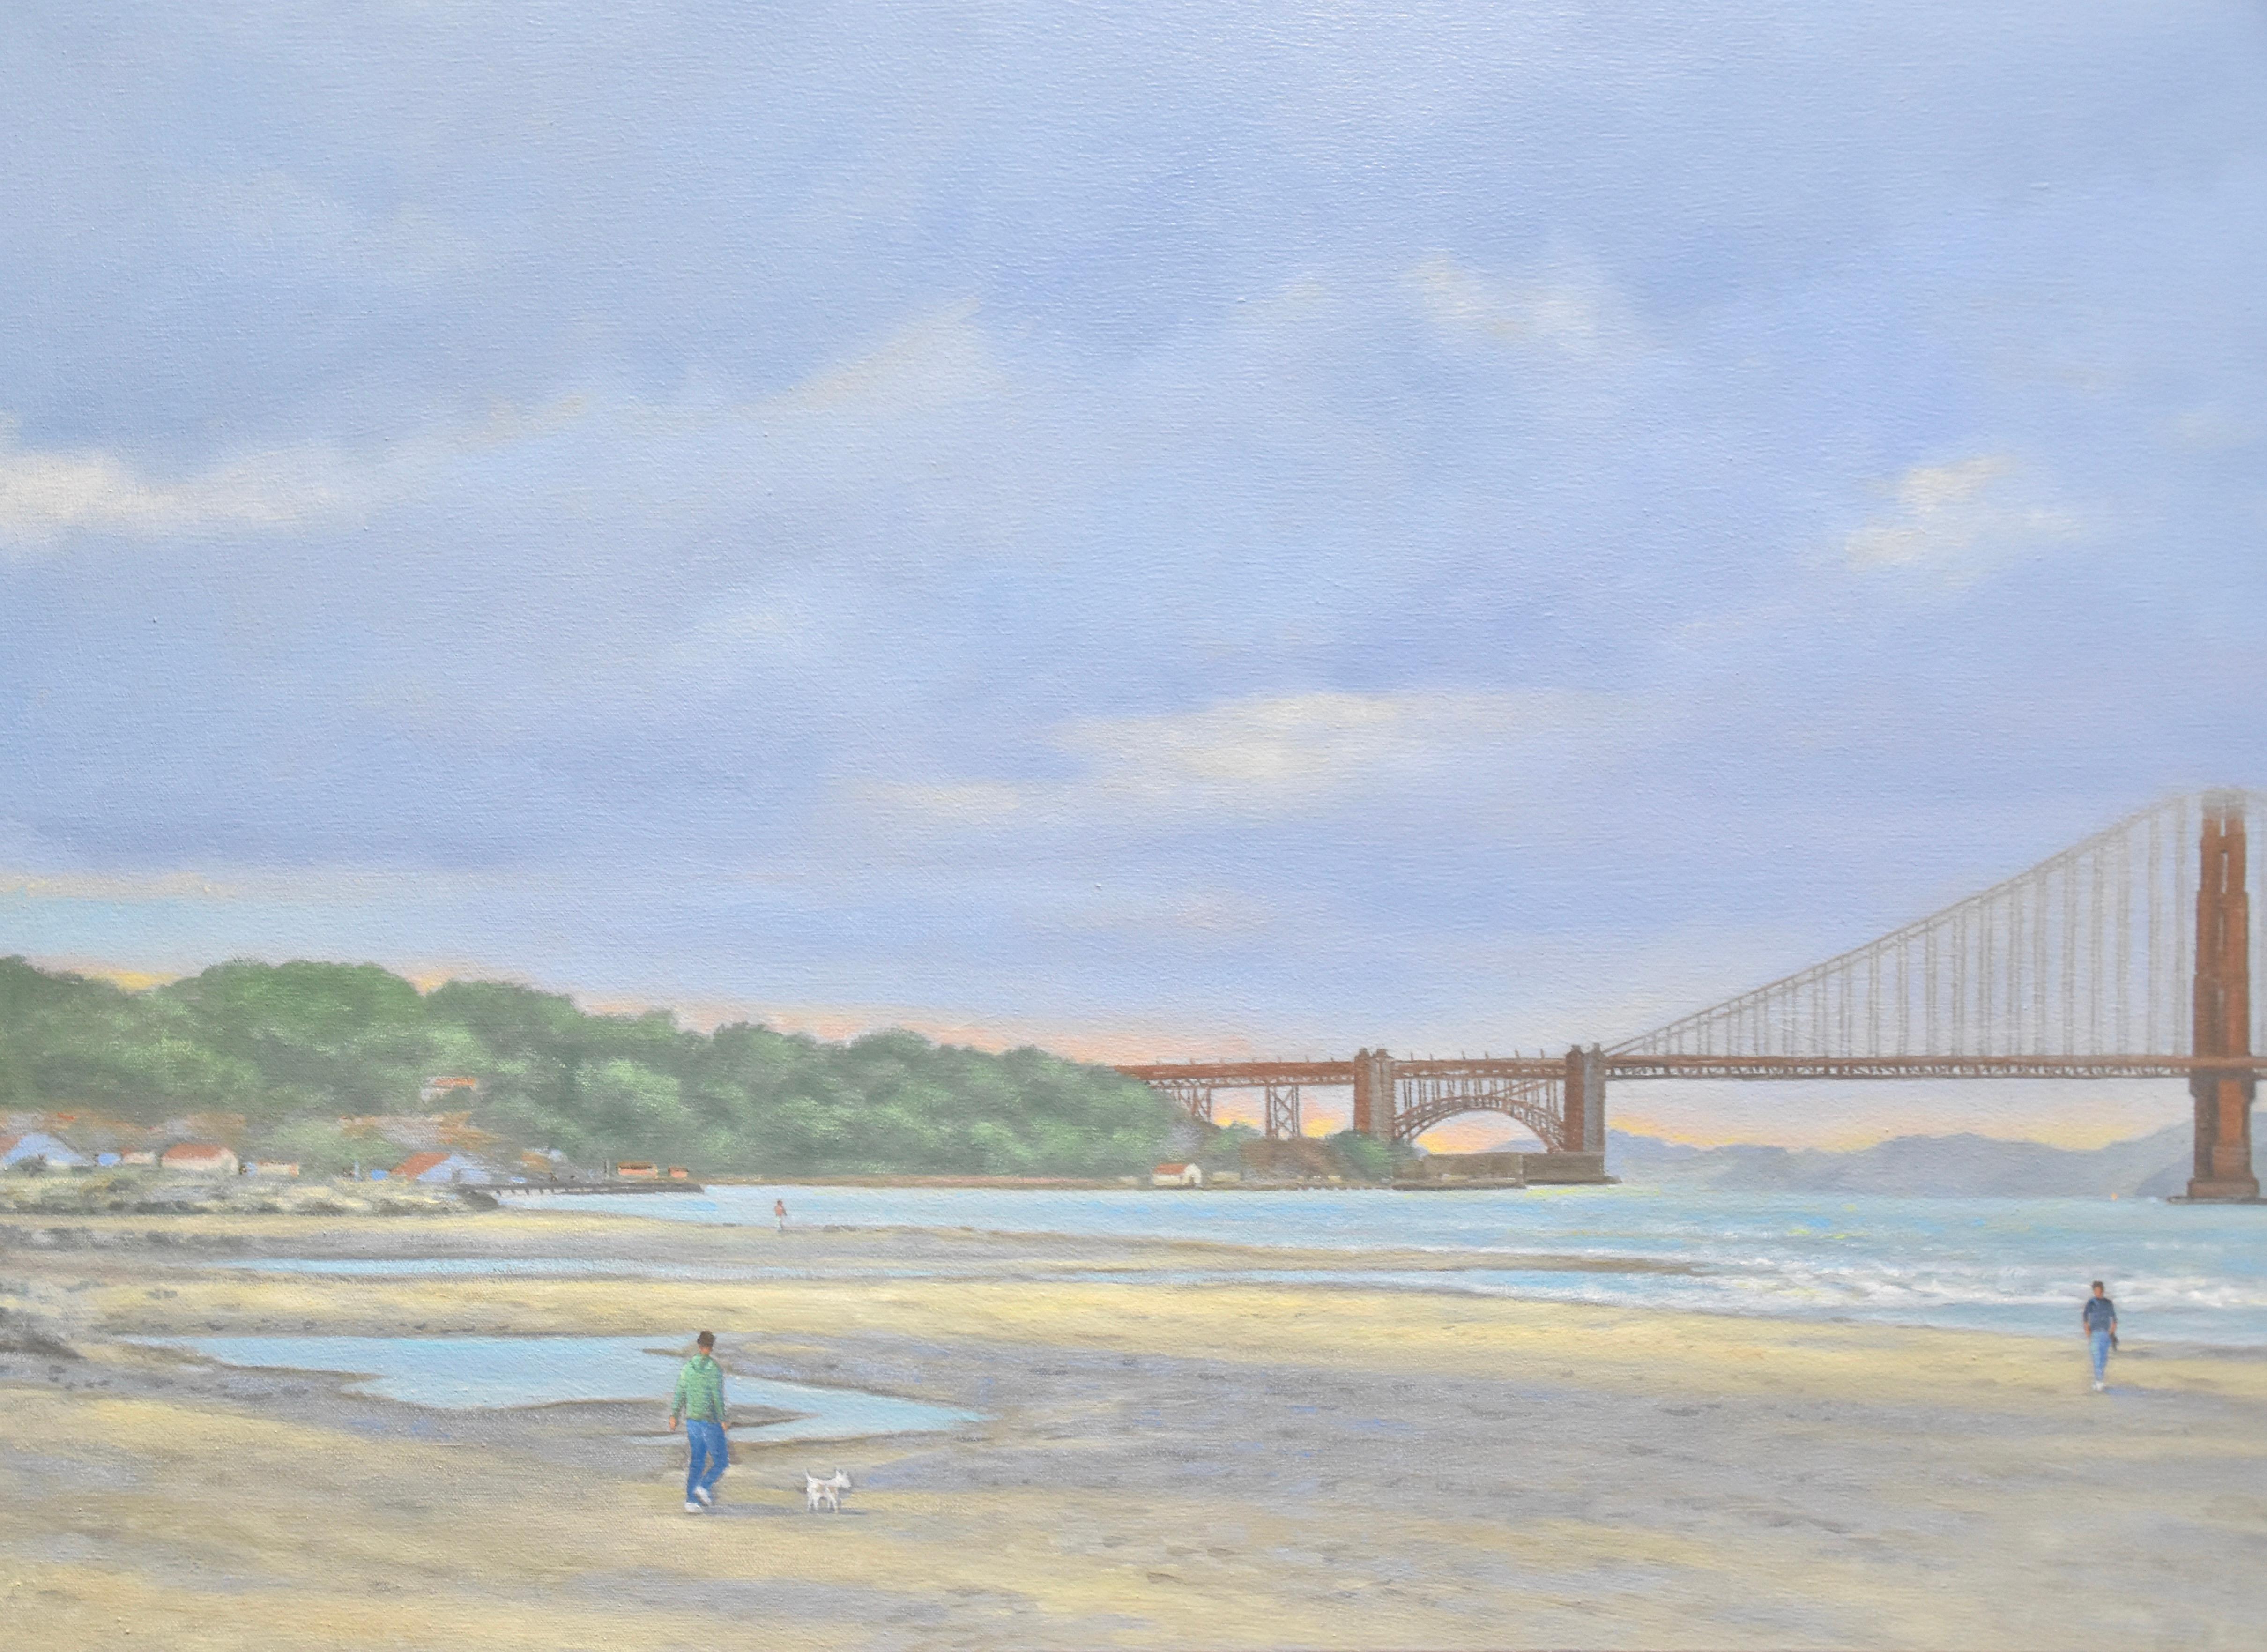 « Beach at Crissy Field » (Le lac de Crissy Field) (San Francisco, Californie) - Painting de Willard Dixon